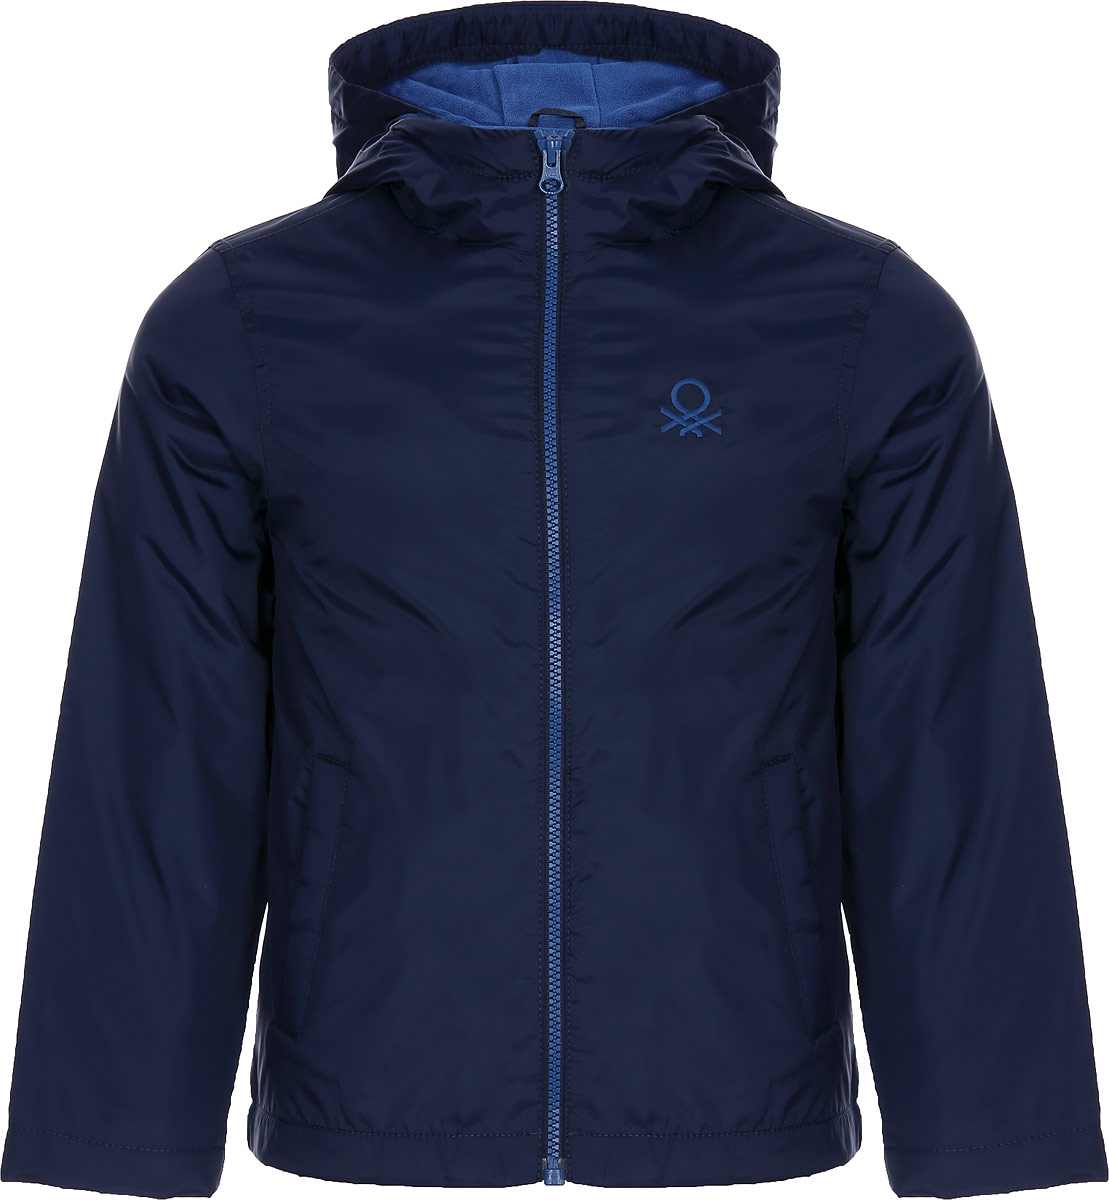 Куртка для мальчика United Colors of Benetton, цвет: синий. 2BL553CM0_13C. Размер 120